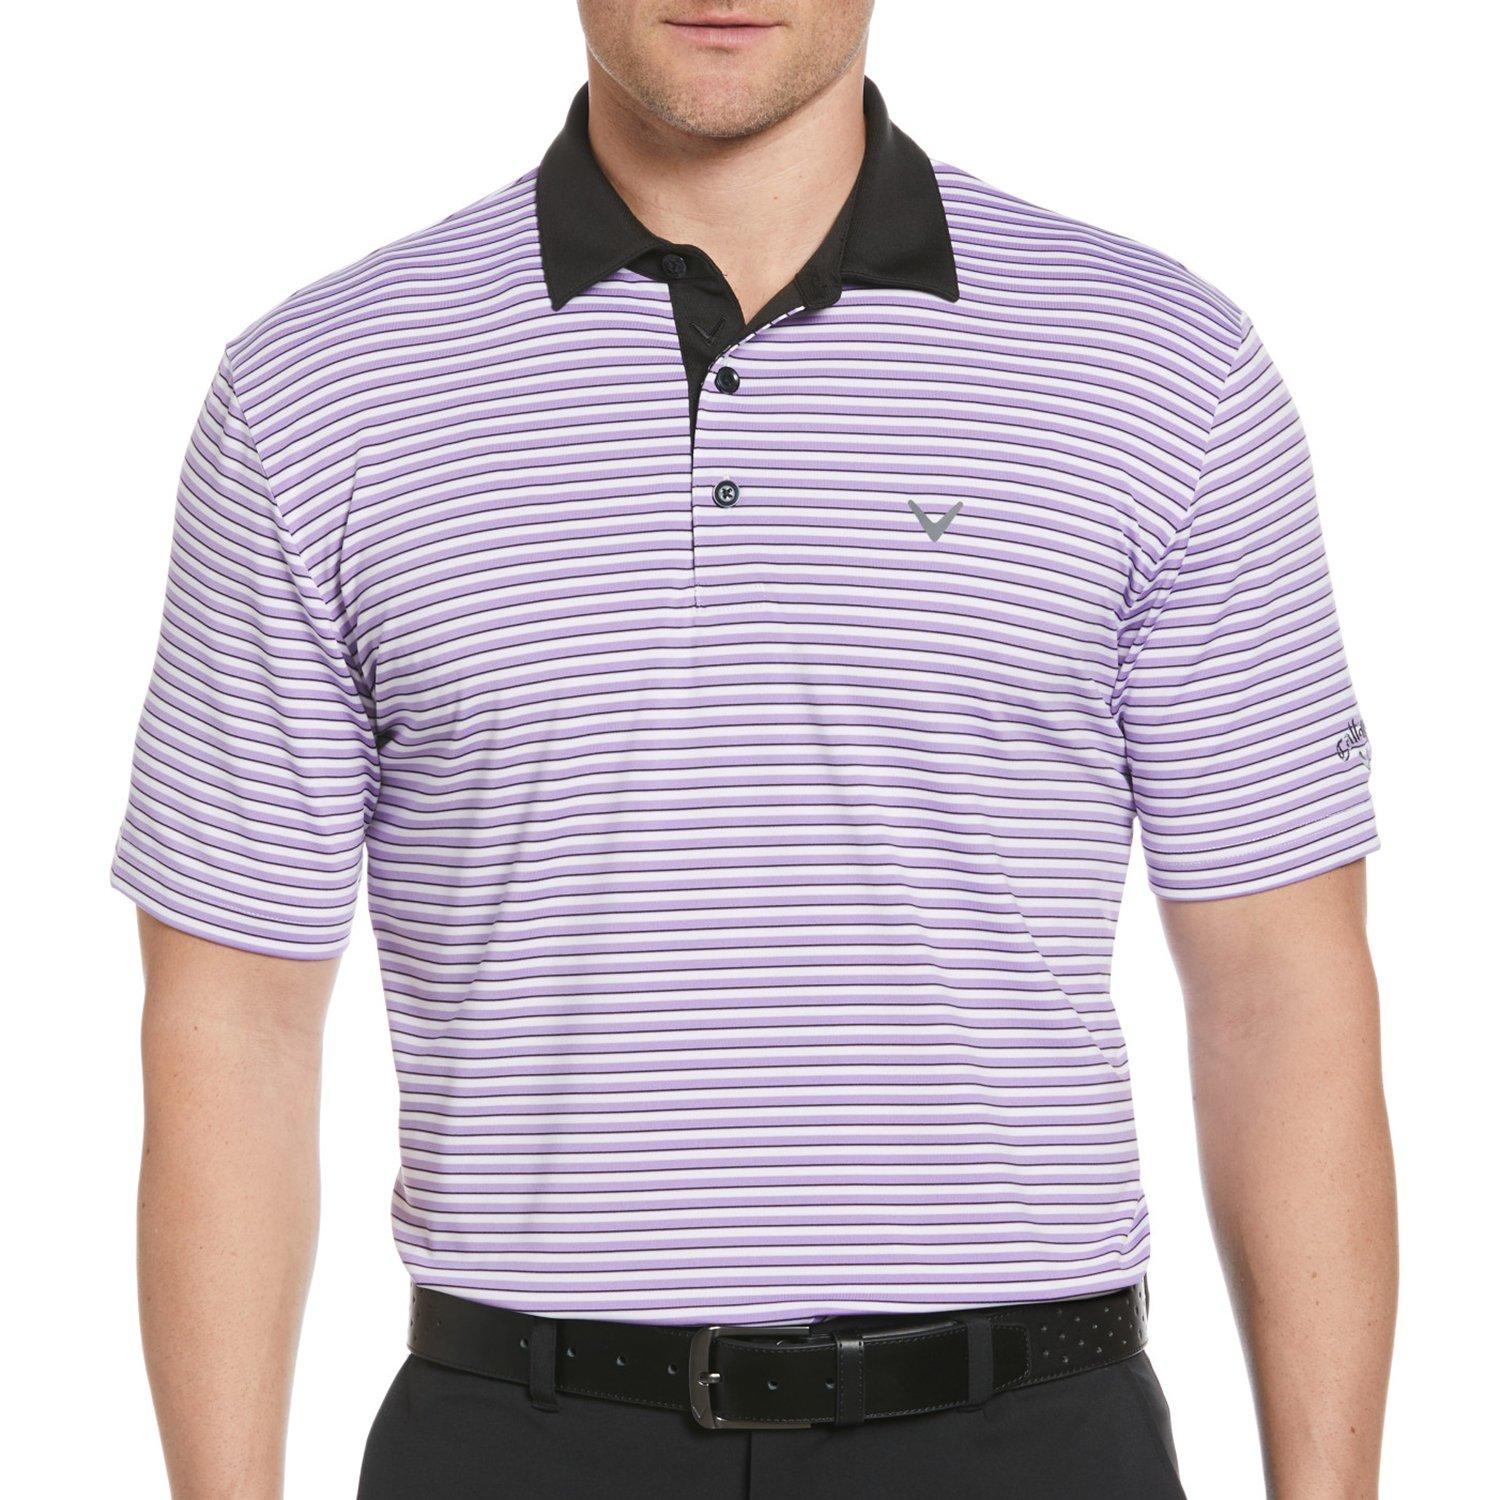 Mens 3 Color Yarn Dye Stripe Golf Polo Shirt